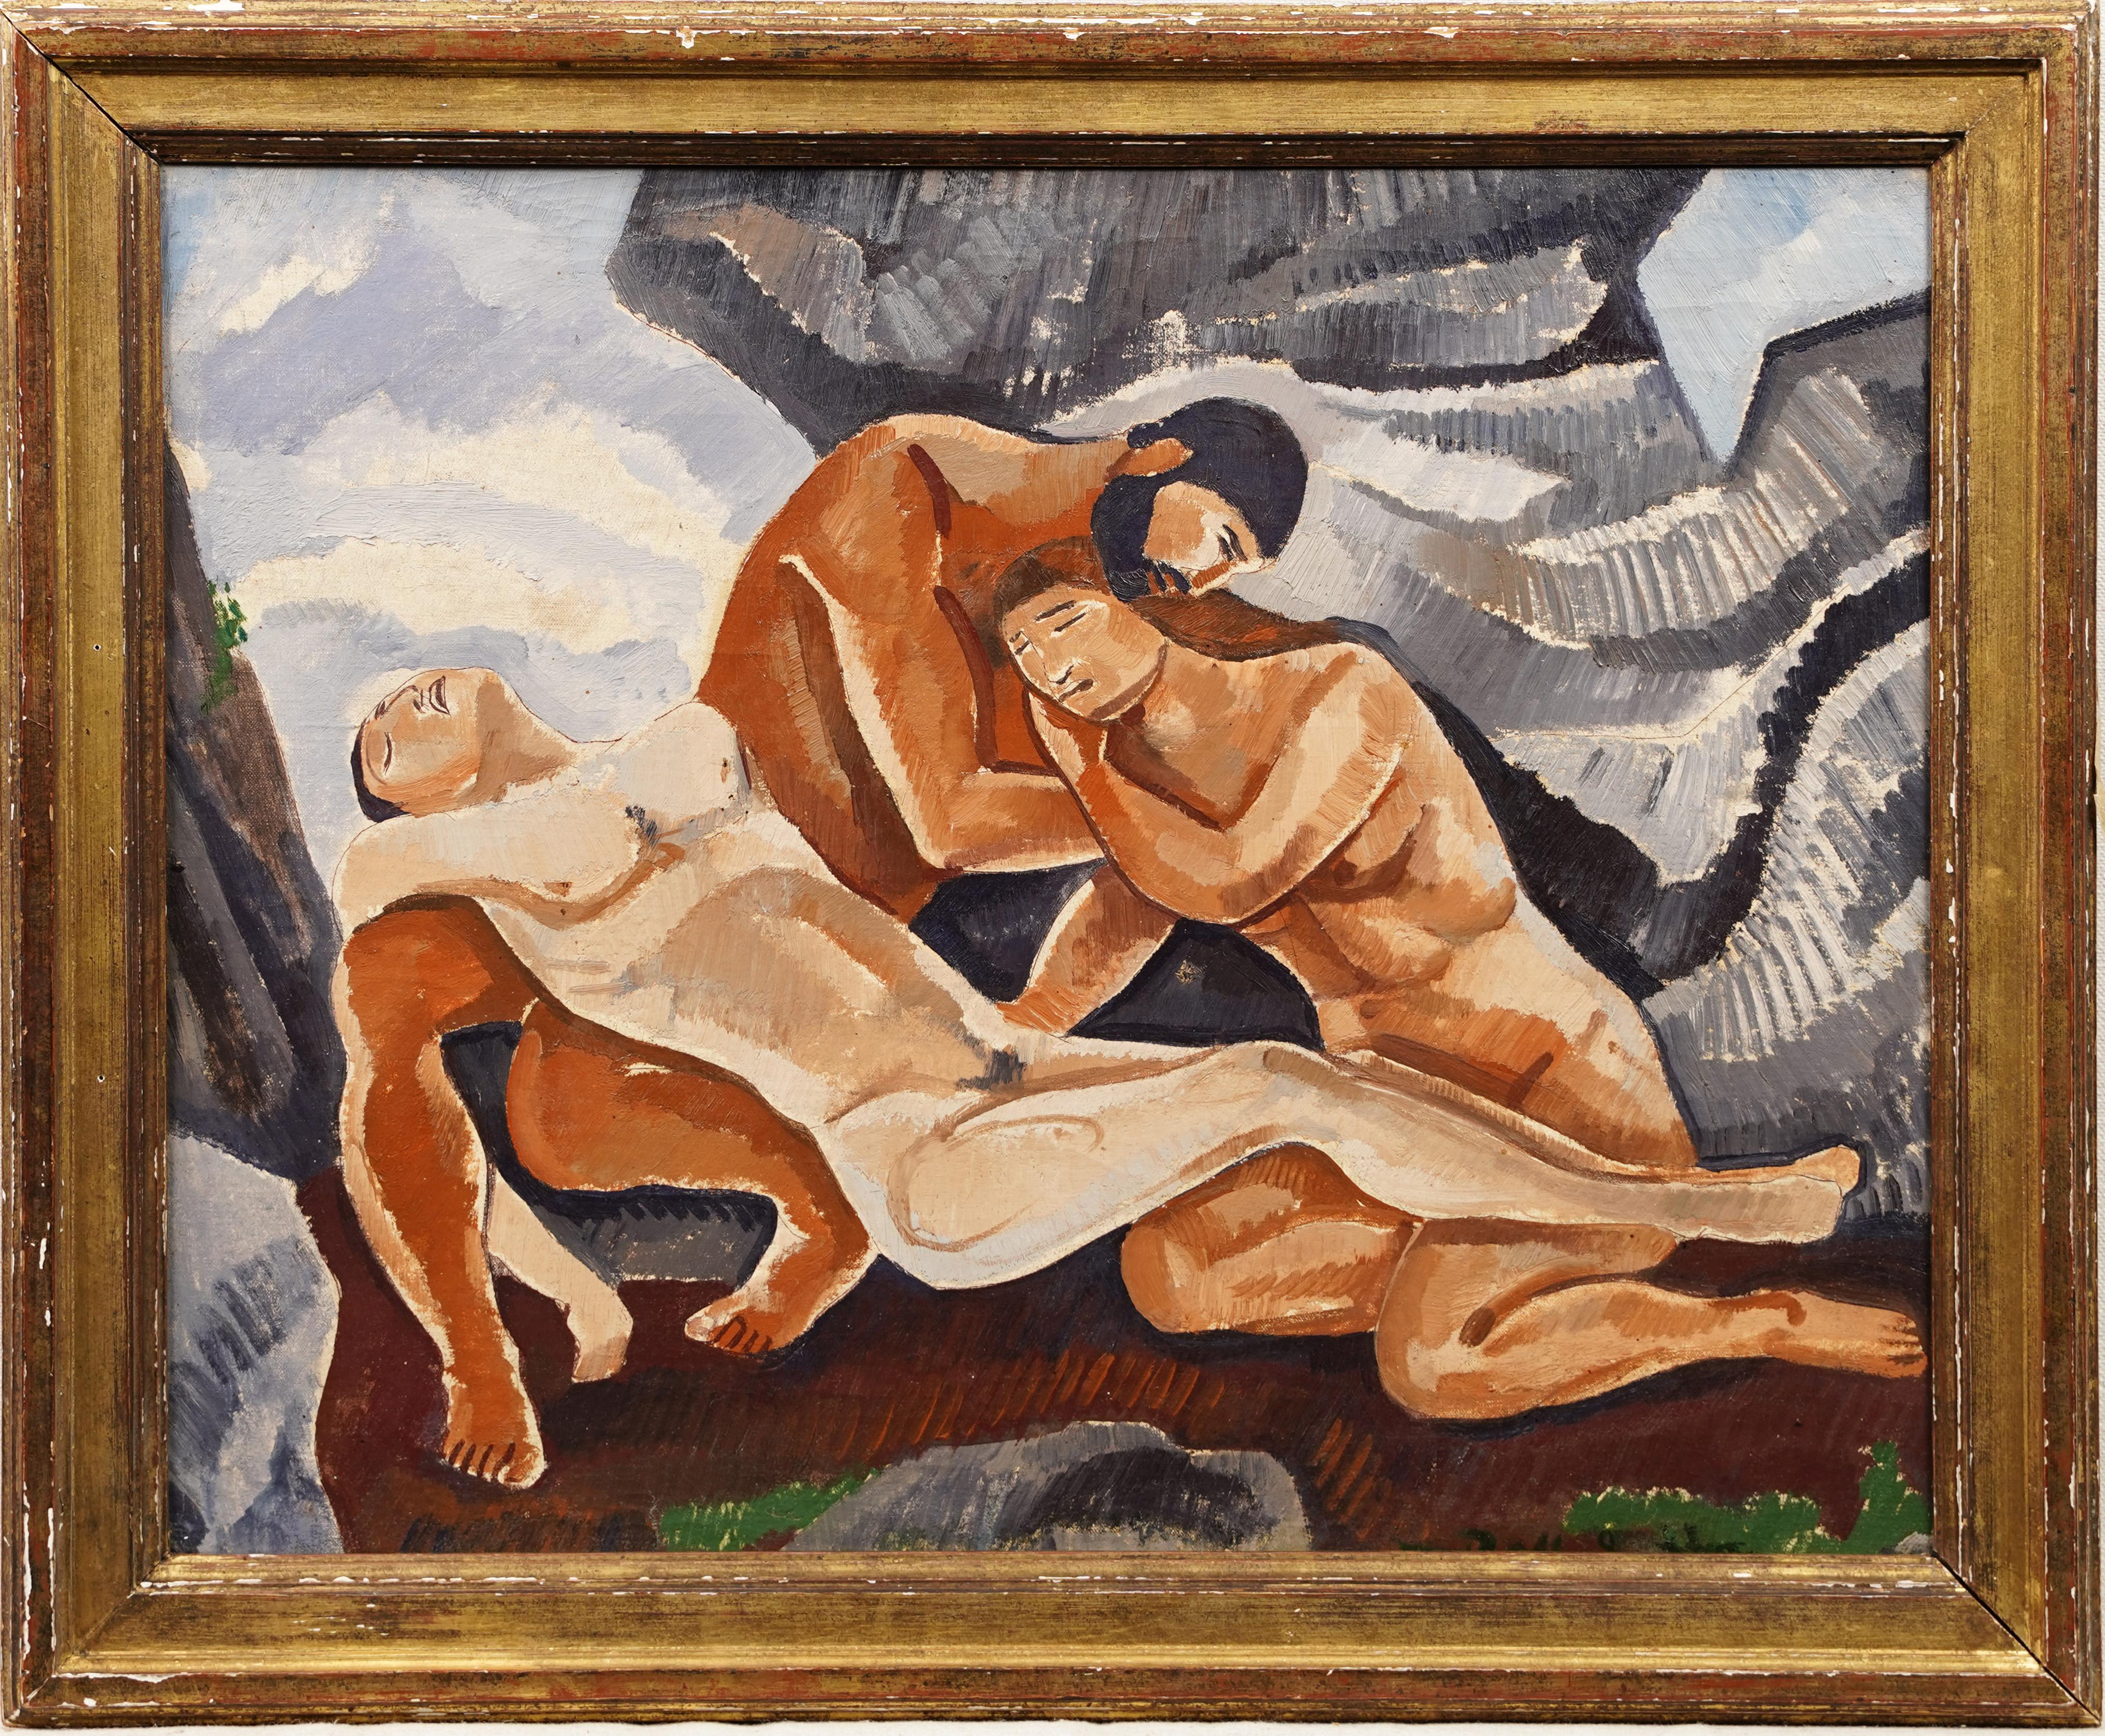 Antique American signed modernist nude male landscape oil painting.  Oil on canvas.  Signed.  Framed.  Image size, 18L x 14H.